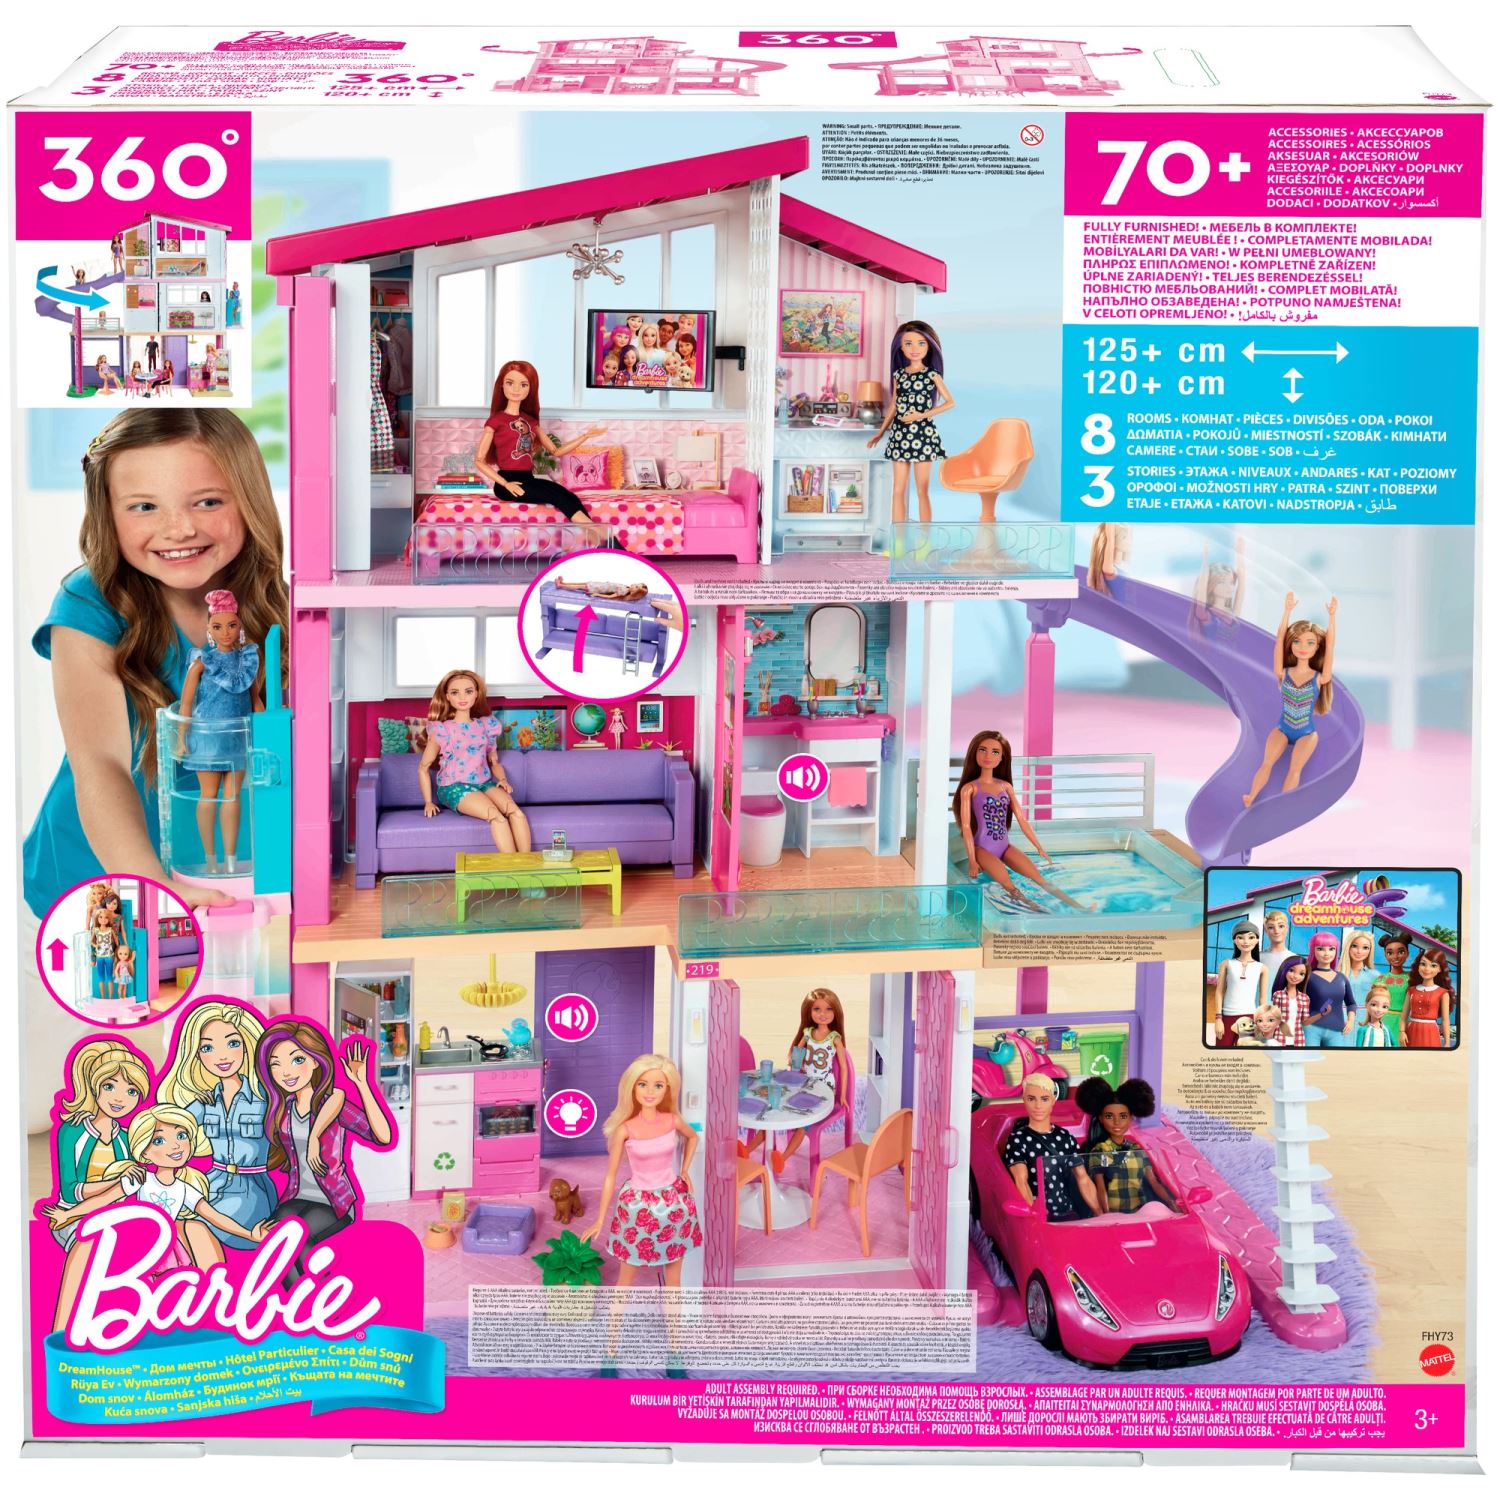 barbie nin ruya evi